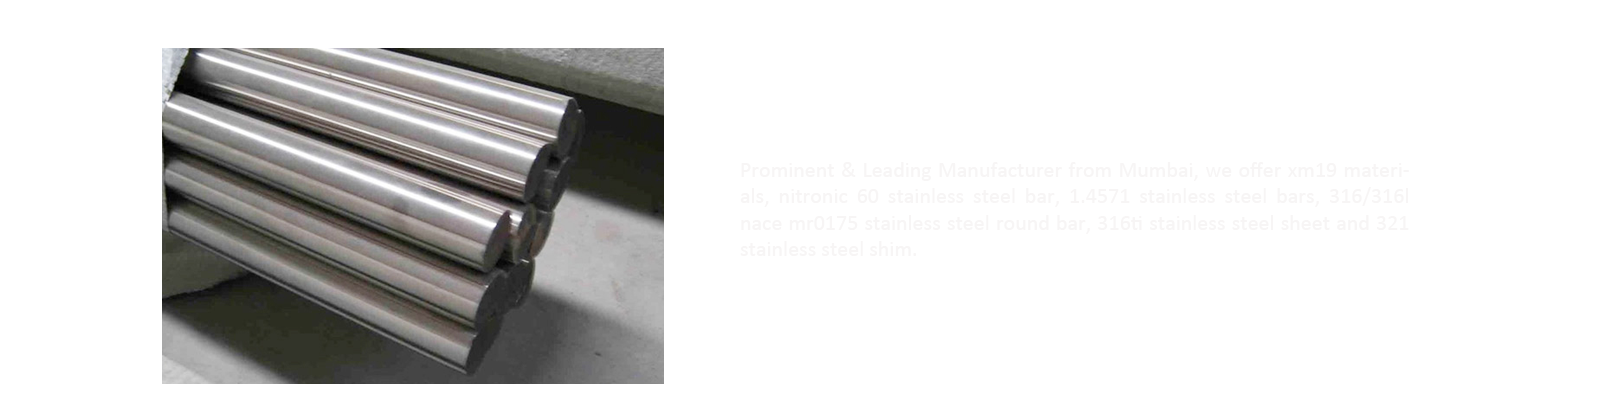 Stainless Steel 300 Series